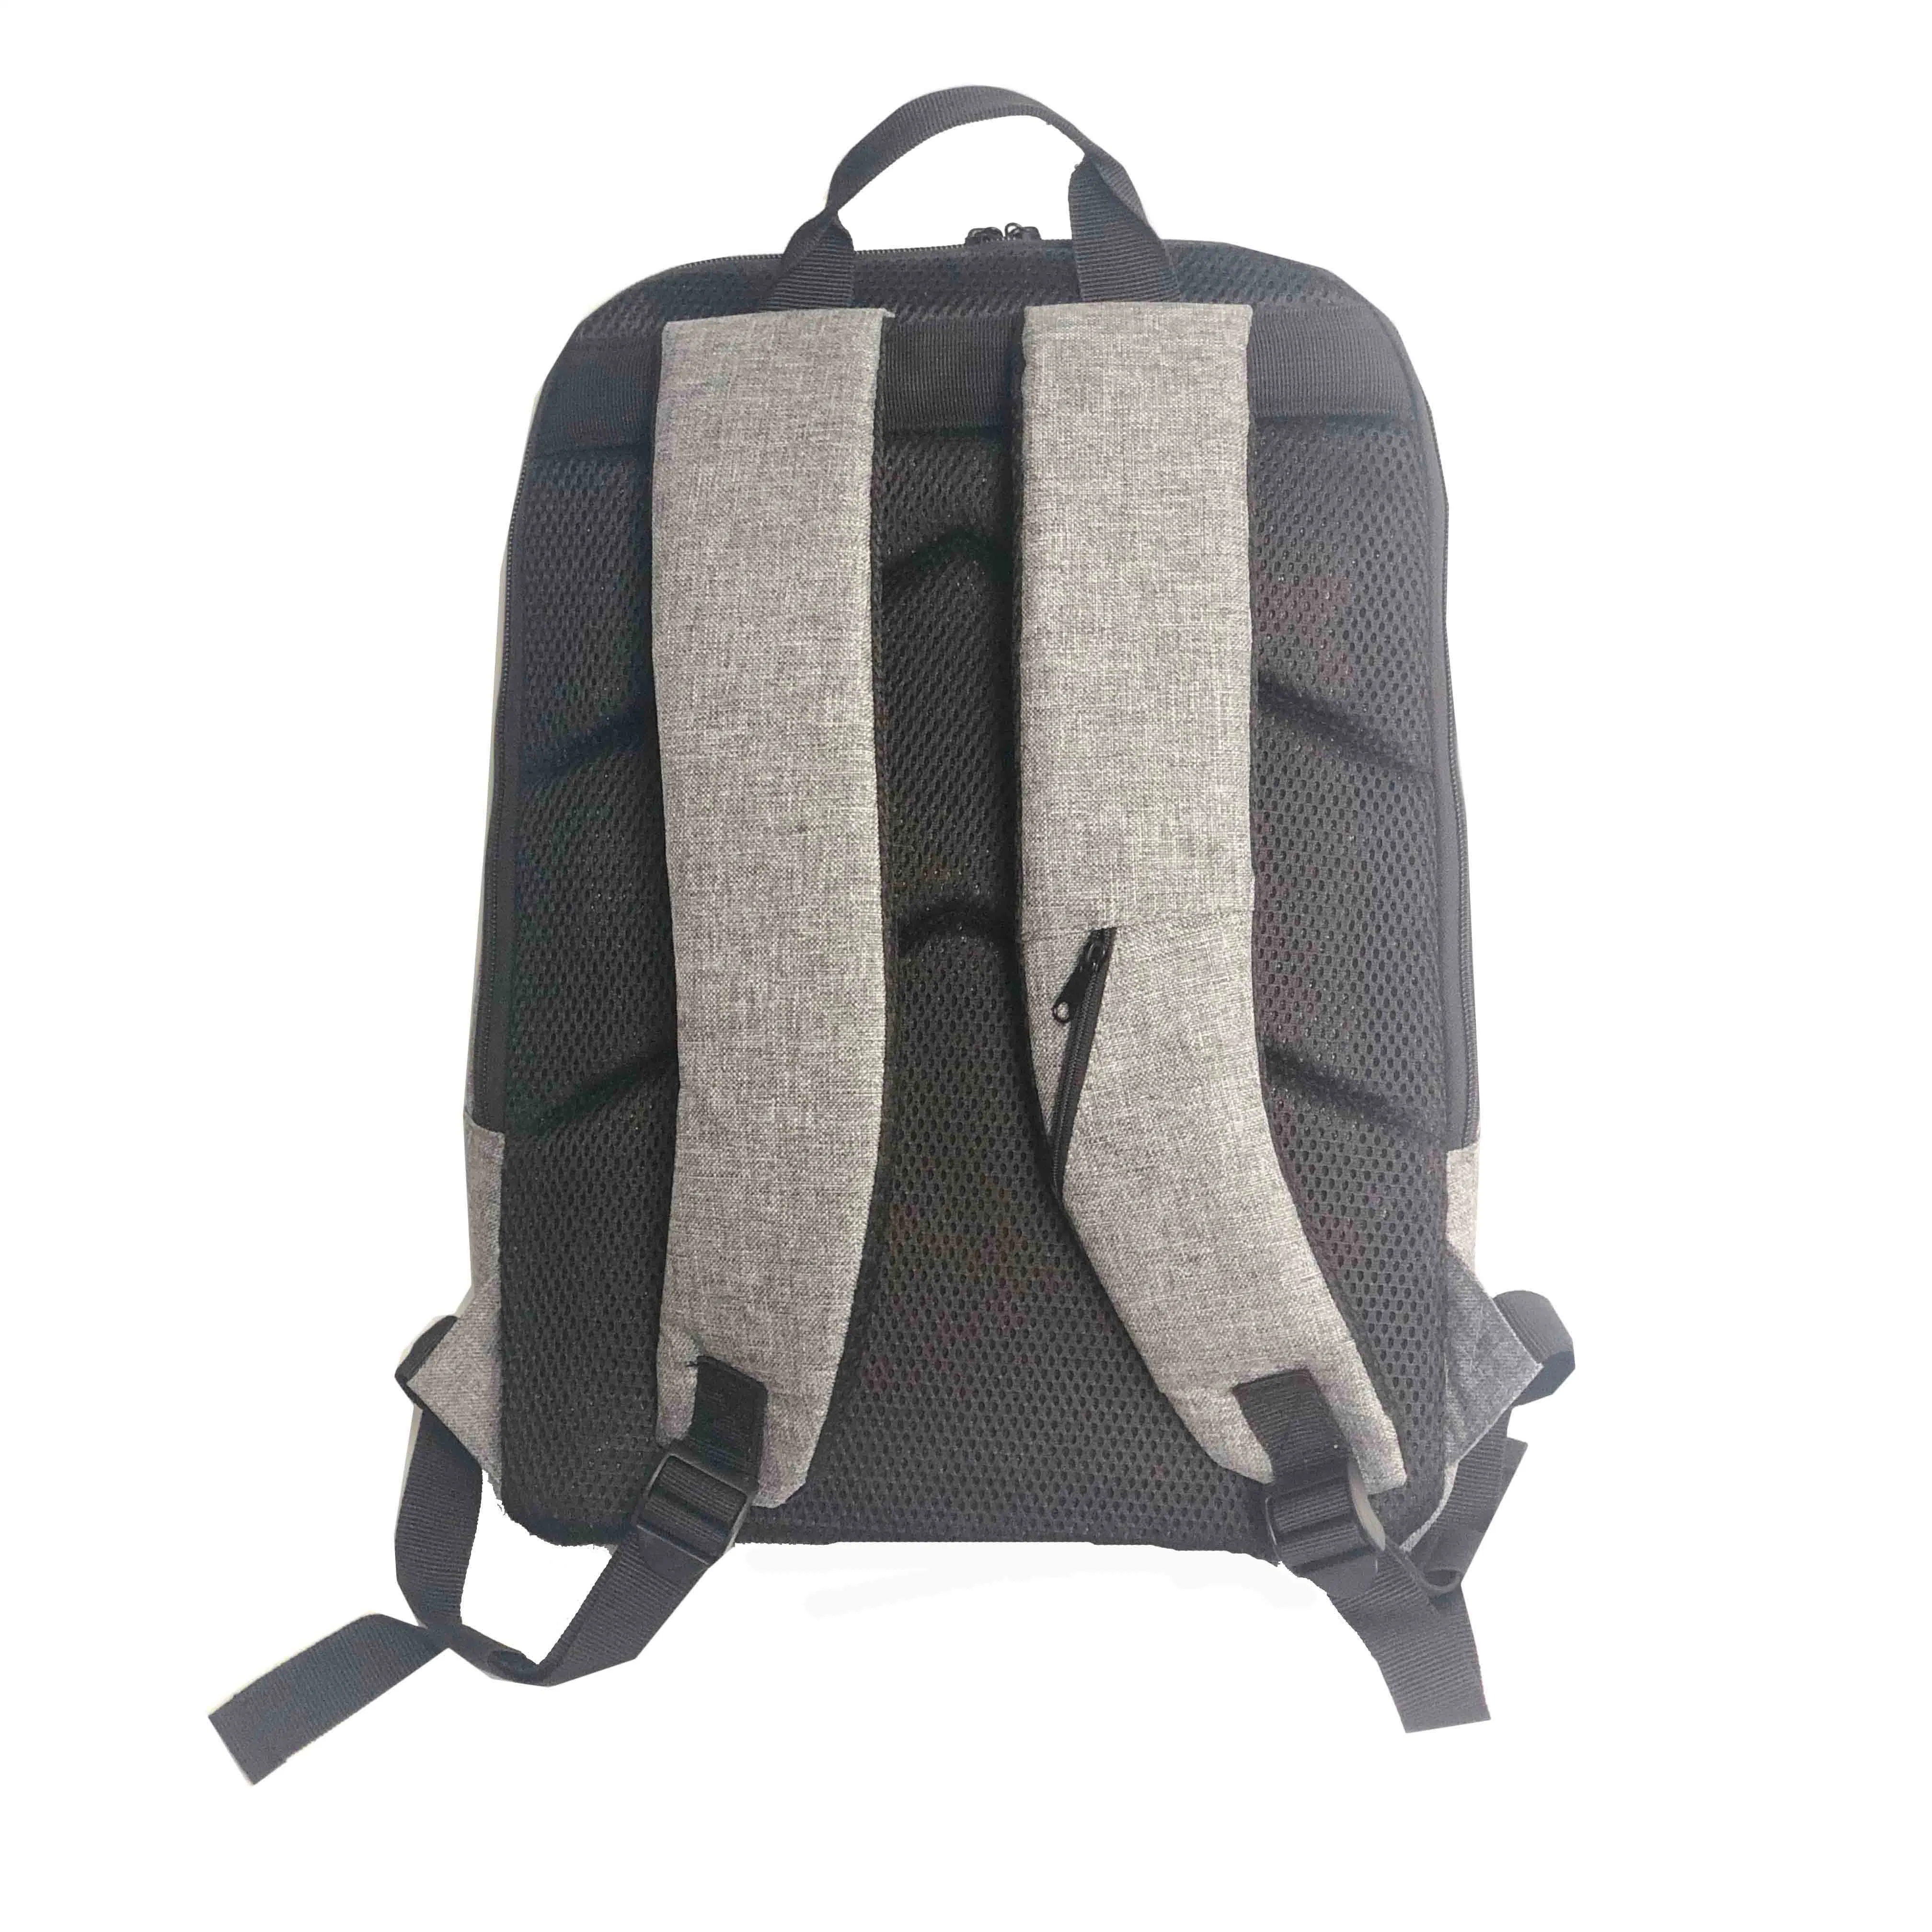 Durable Havey Duty Business Travel Laptop Backpack for Women Men